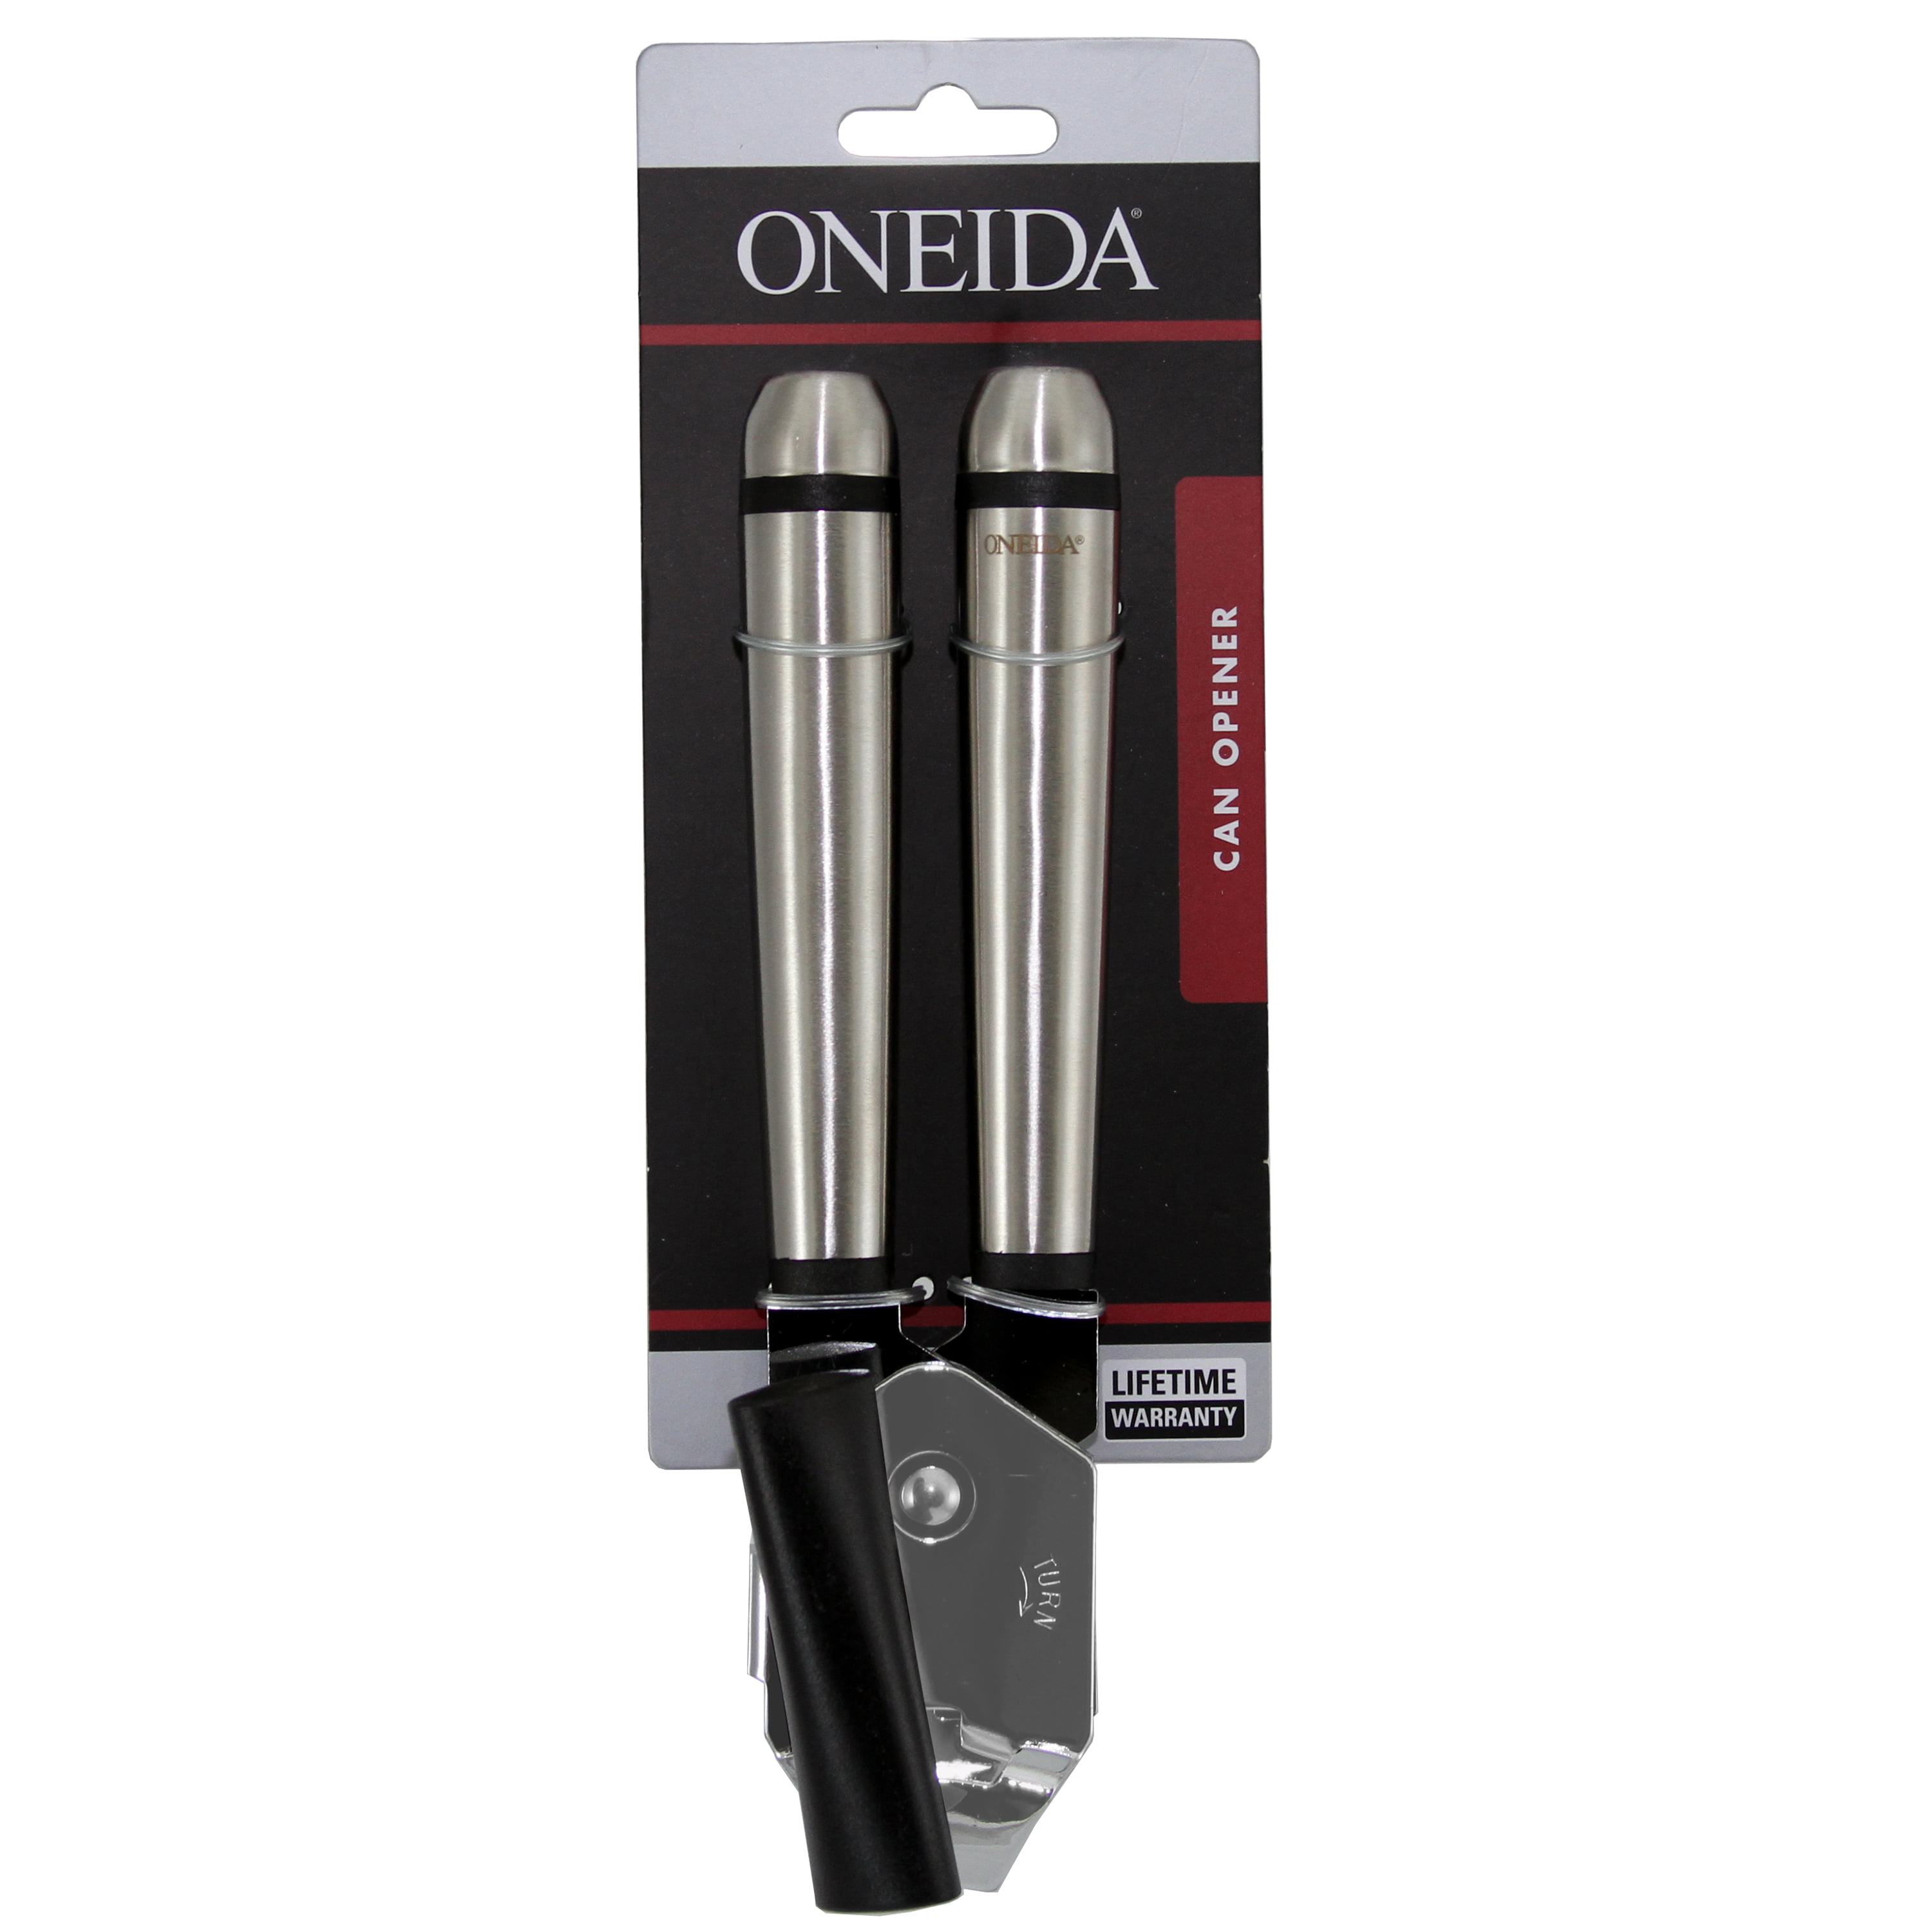 Oneida Can Opener Reviews 2023